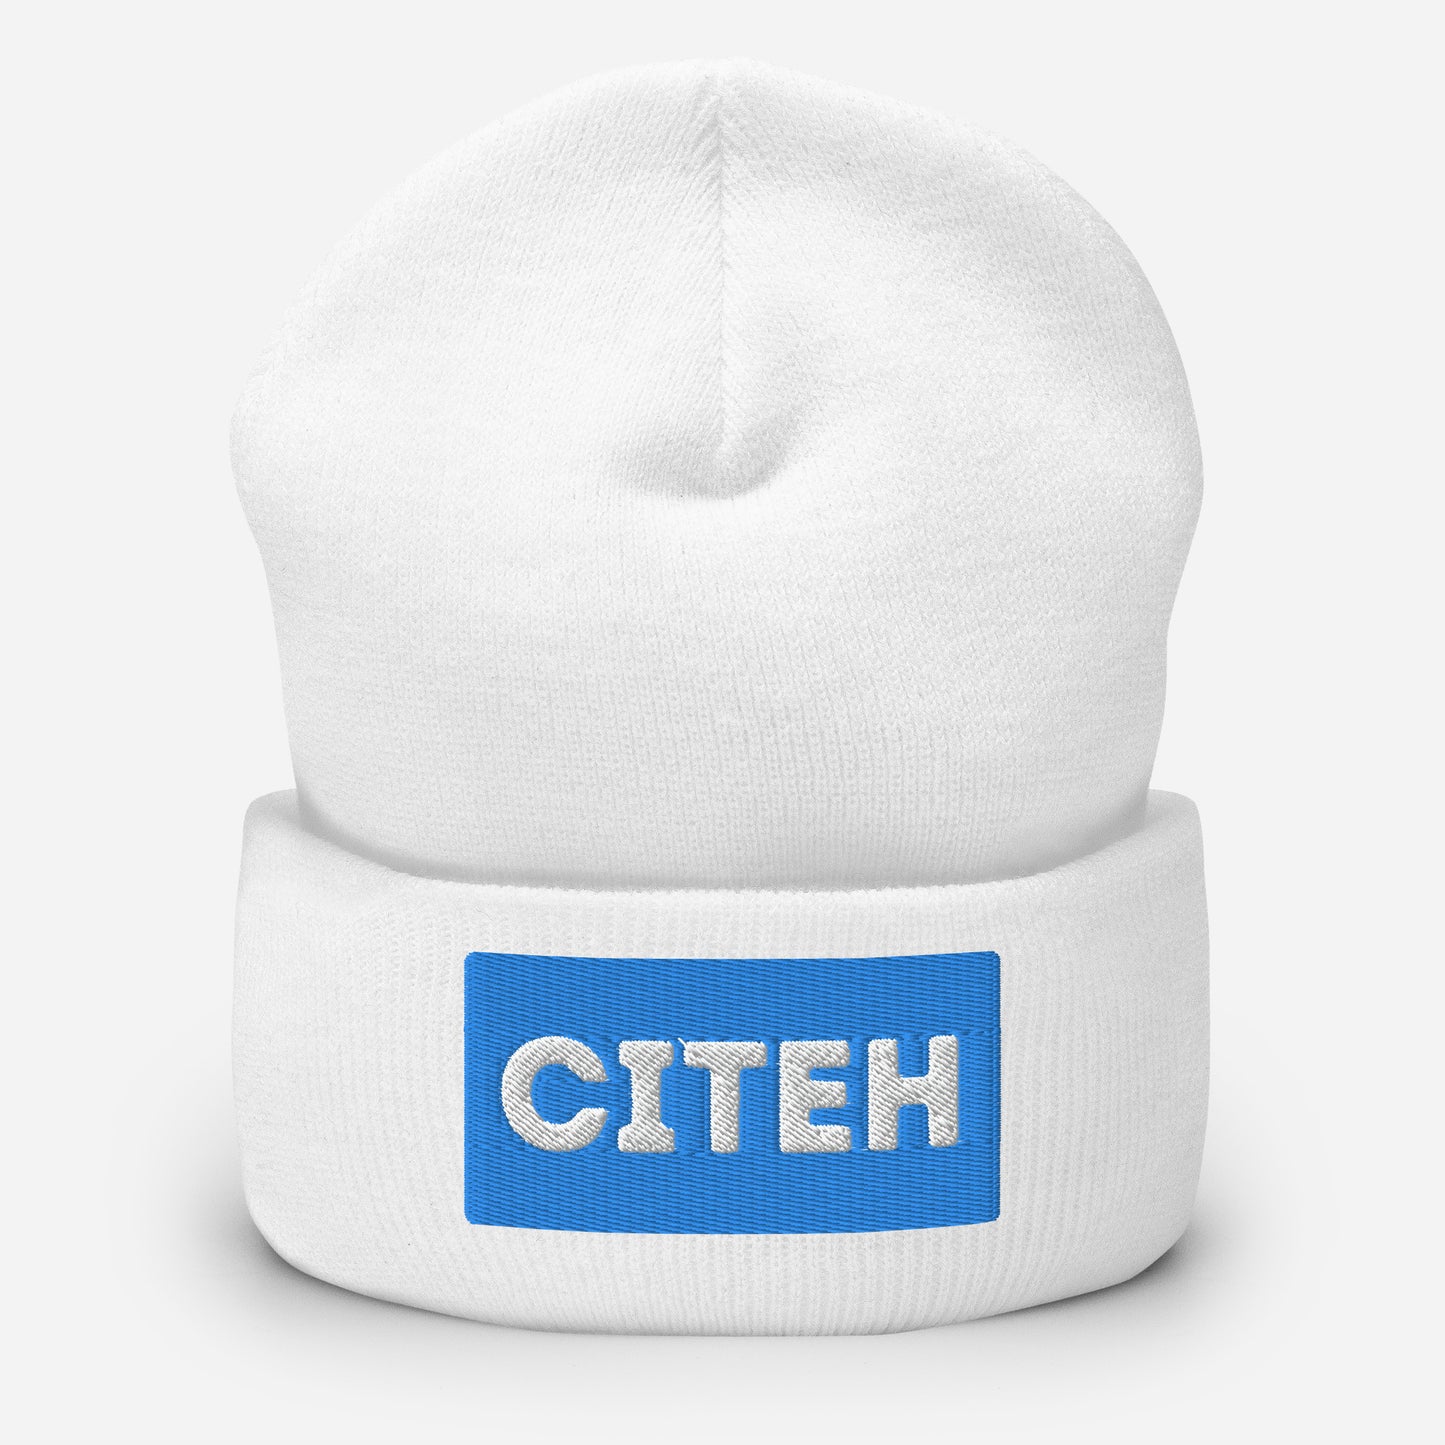 Citeh Cuffed Beanie Hat